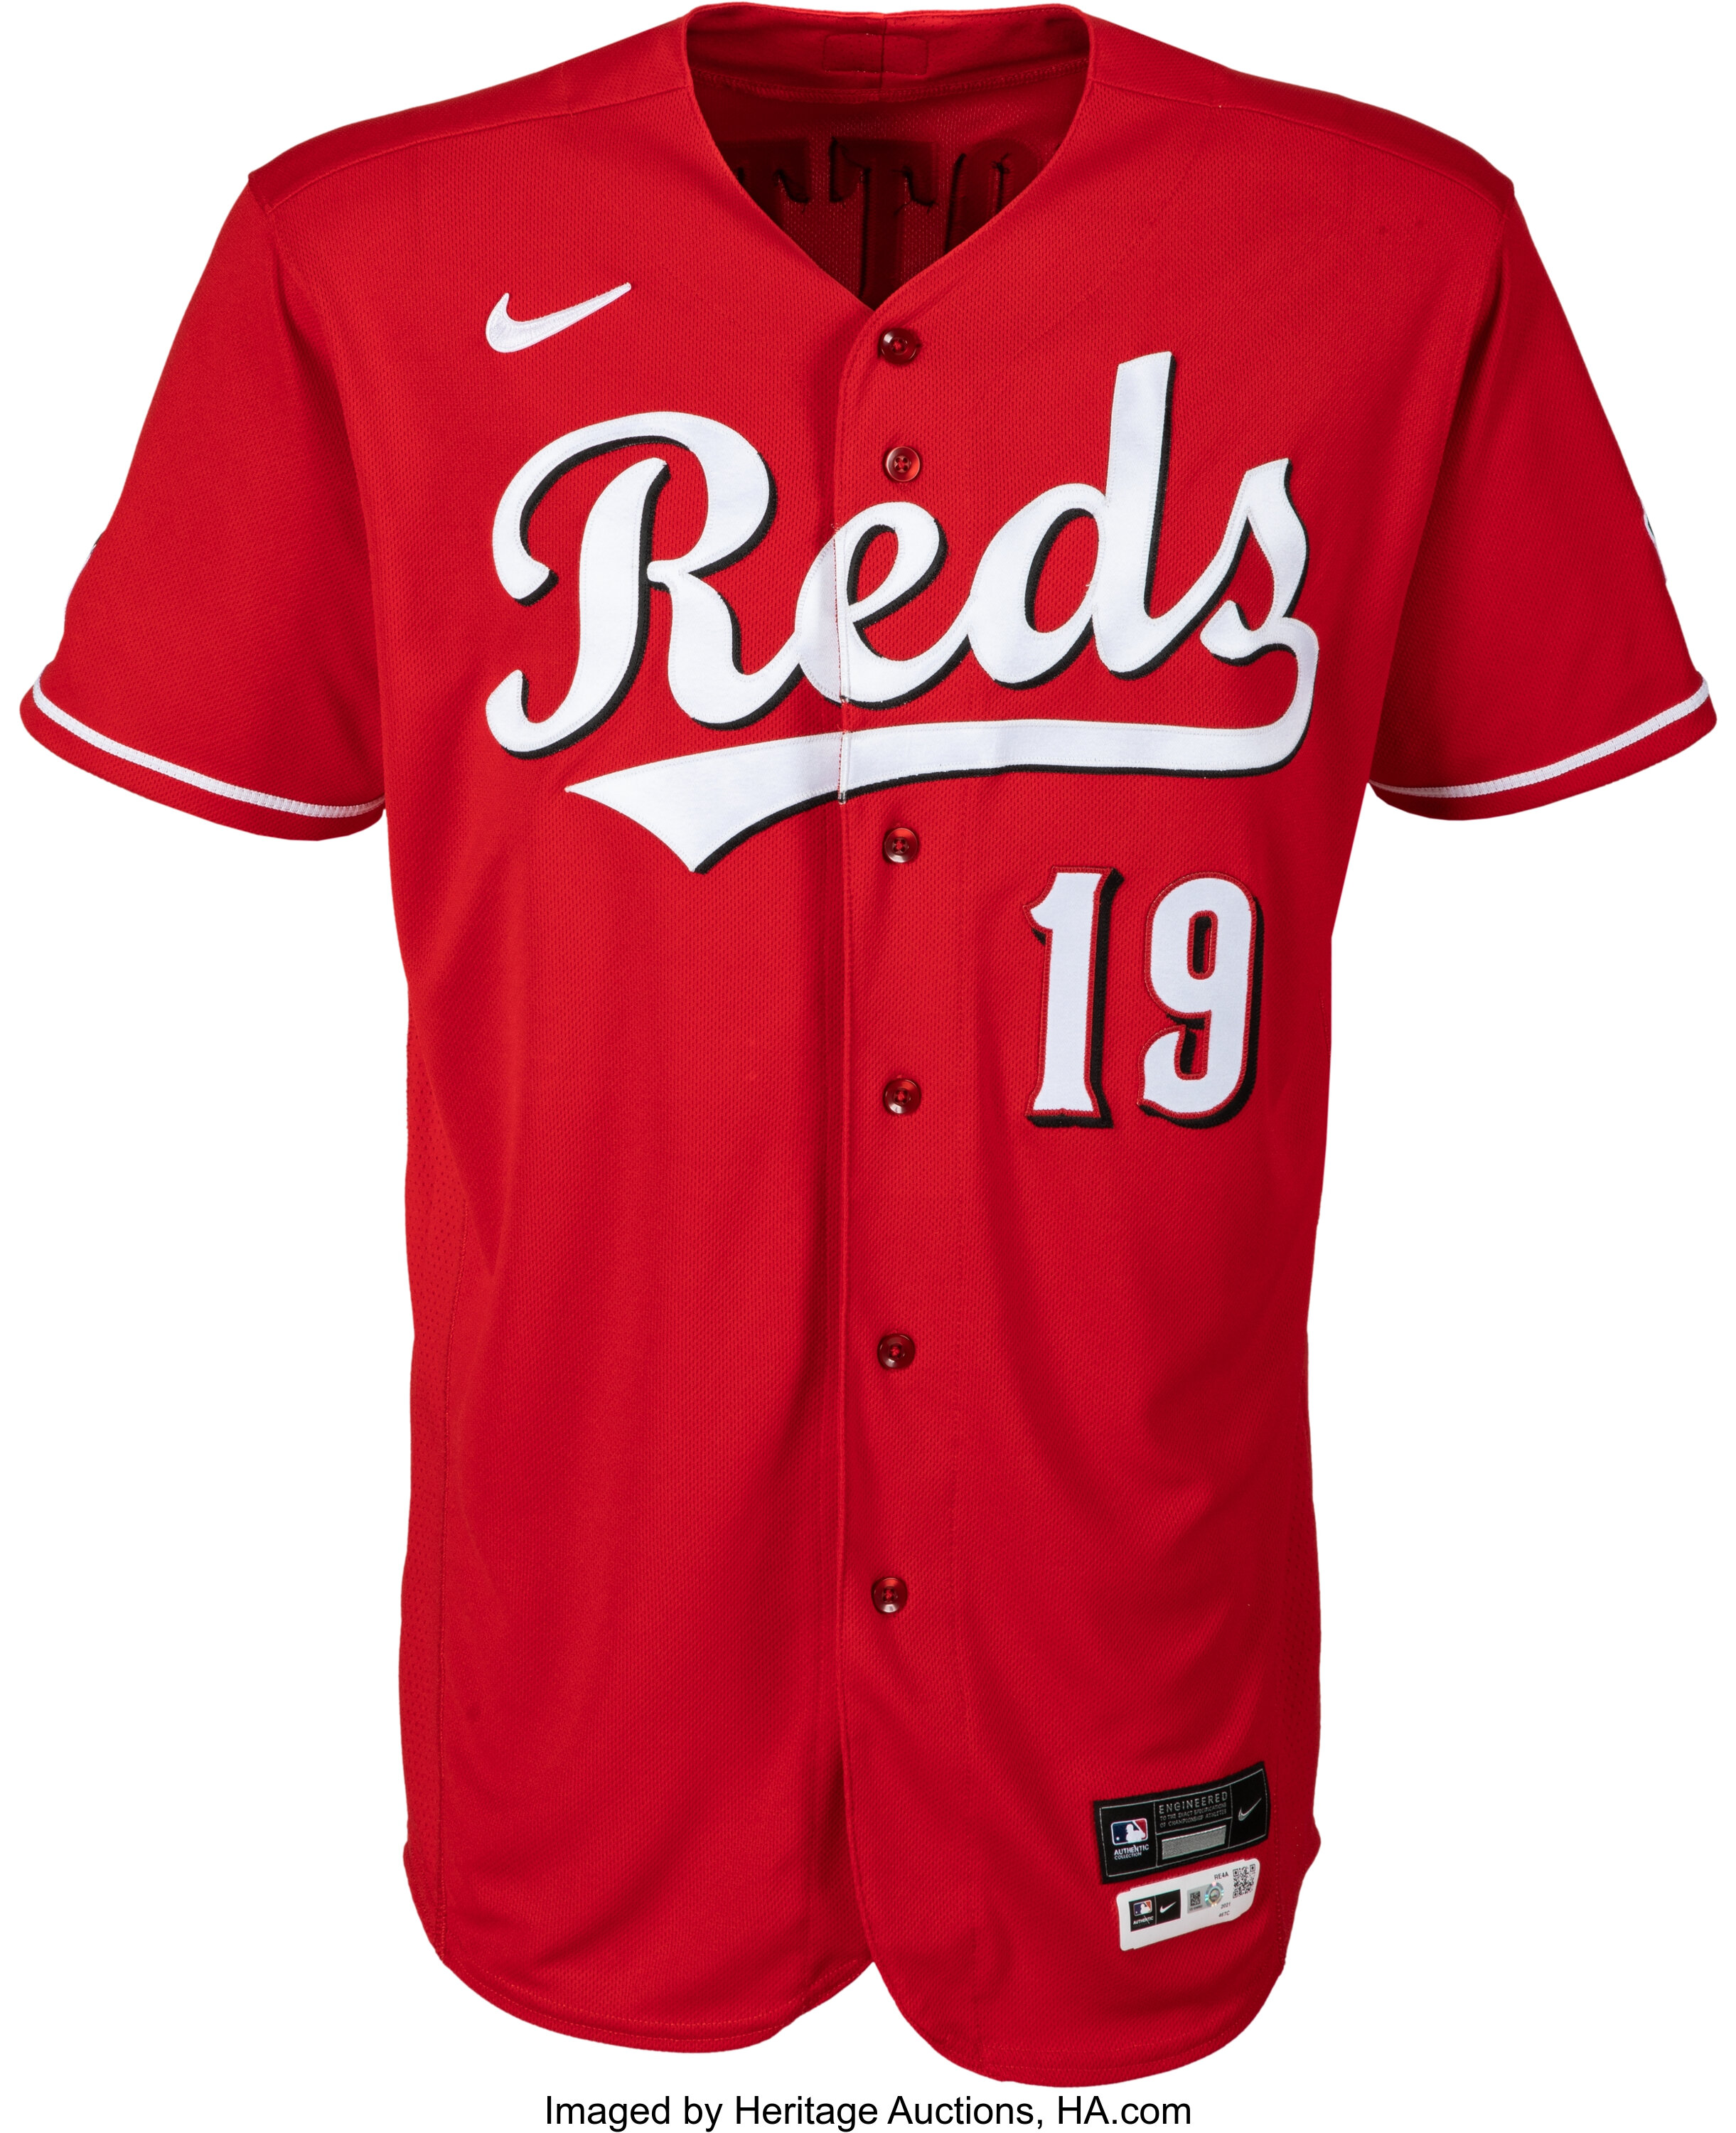 2021 Joey Votto Game Worn & Signed Cincinnati Reds Jersey, MLB, Lot #3